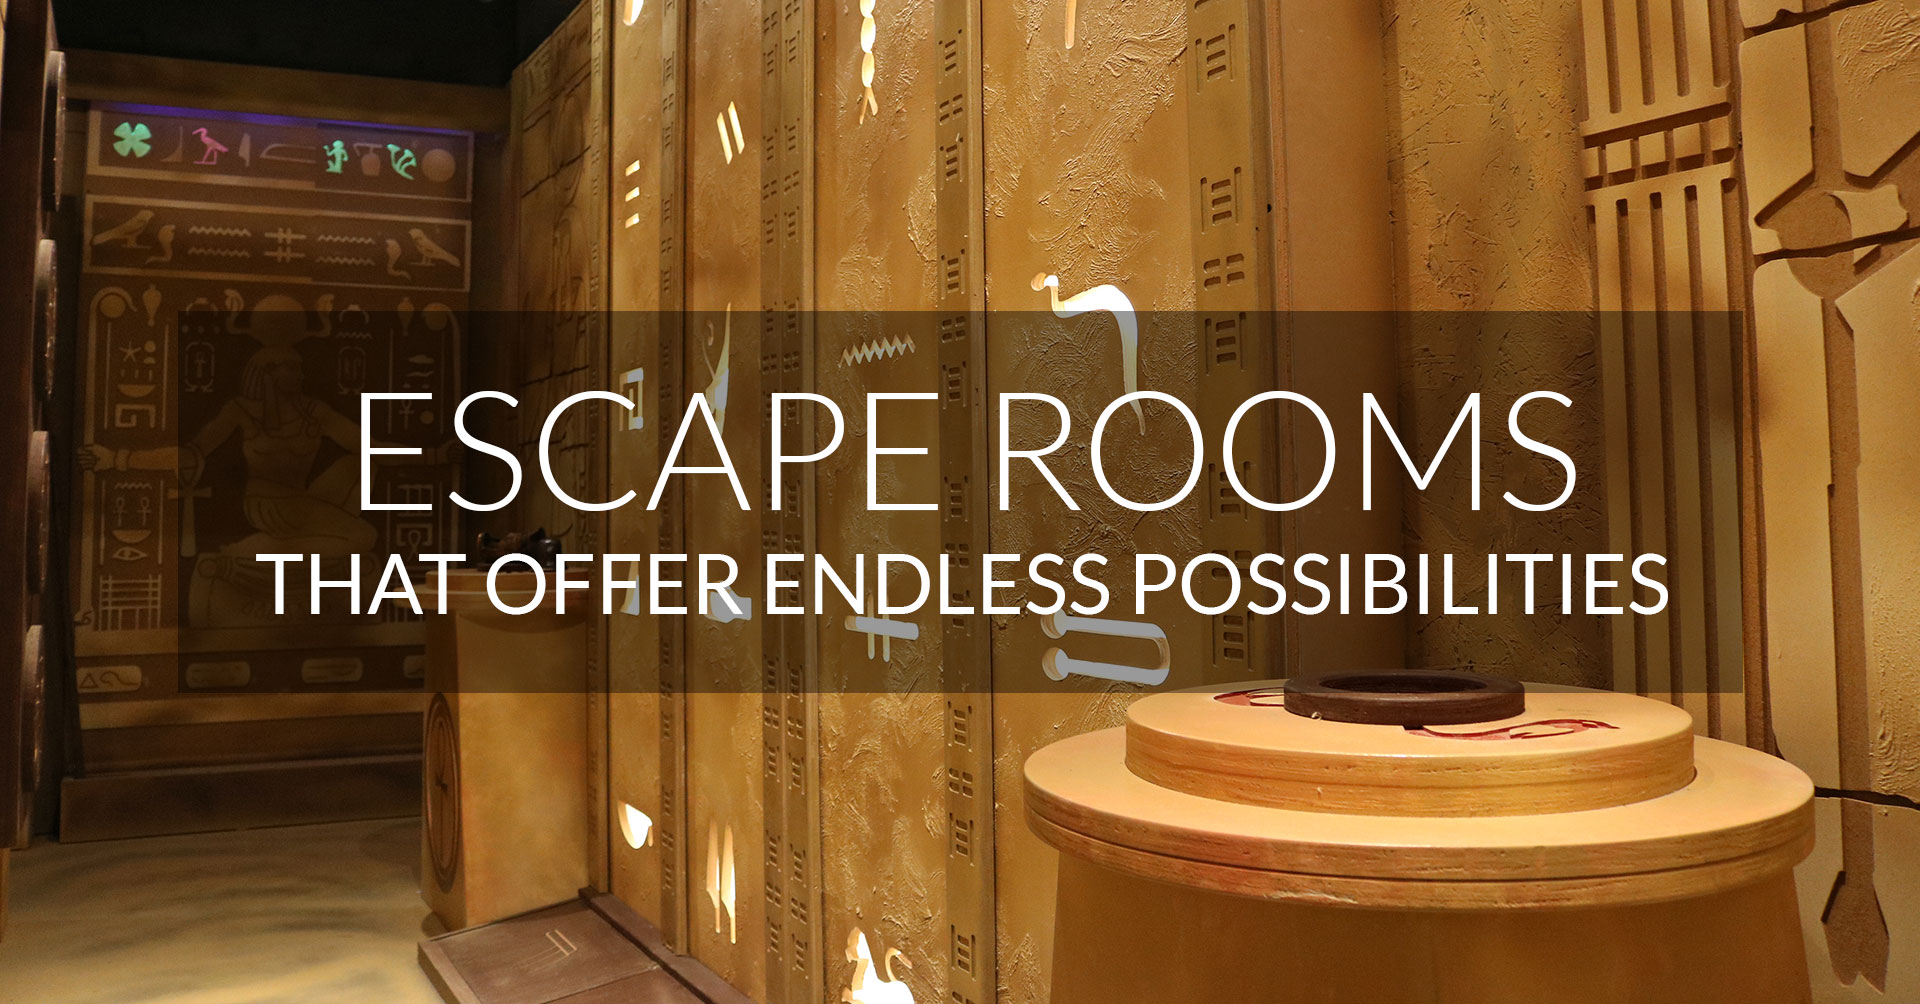 Escape Room Ideas - Diy escape room room ideas that are easy to